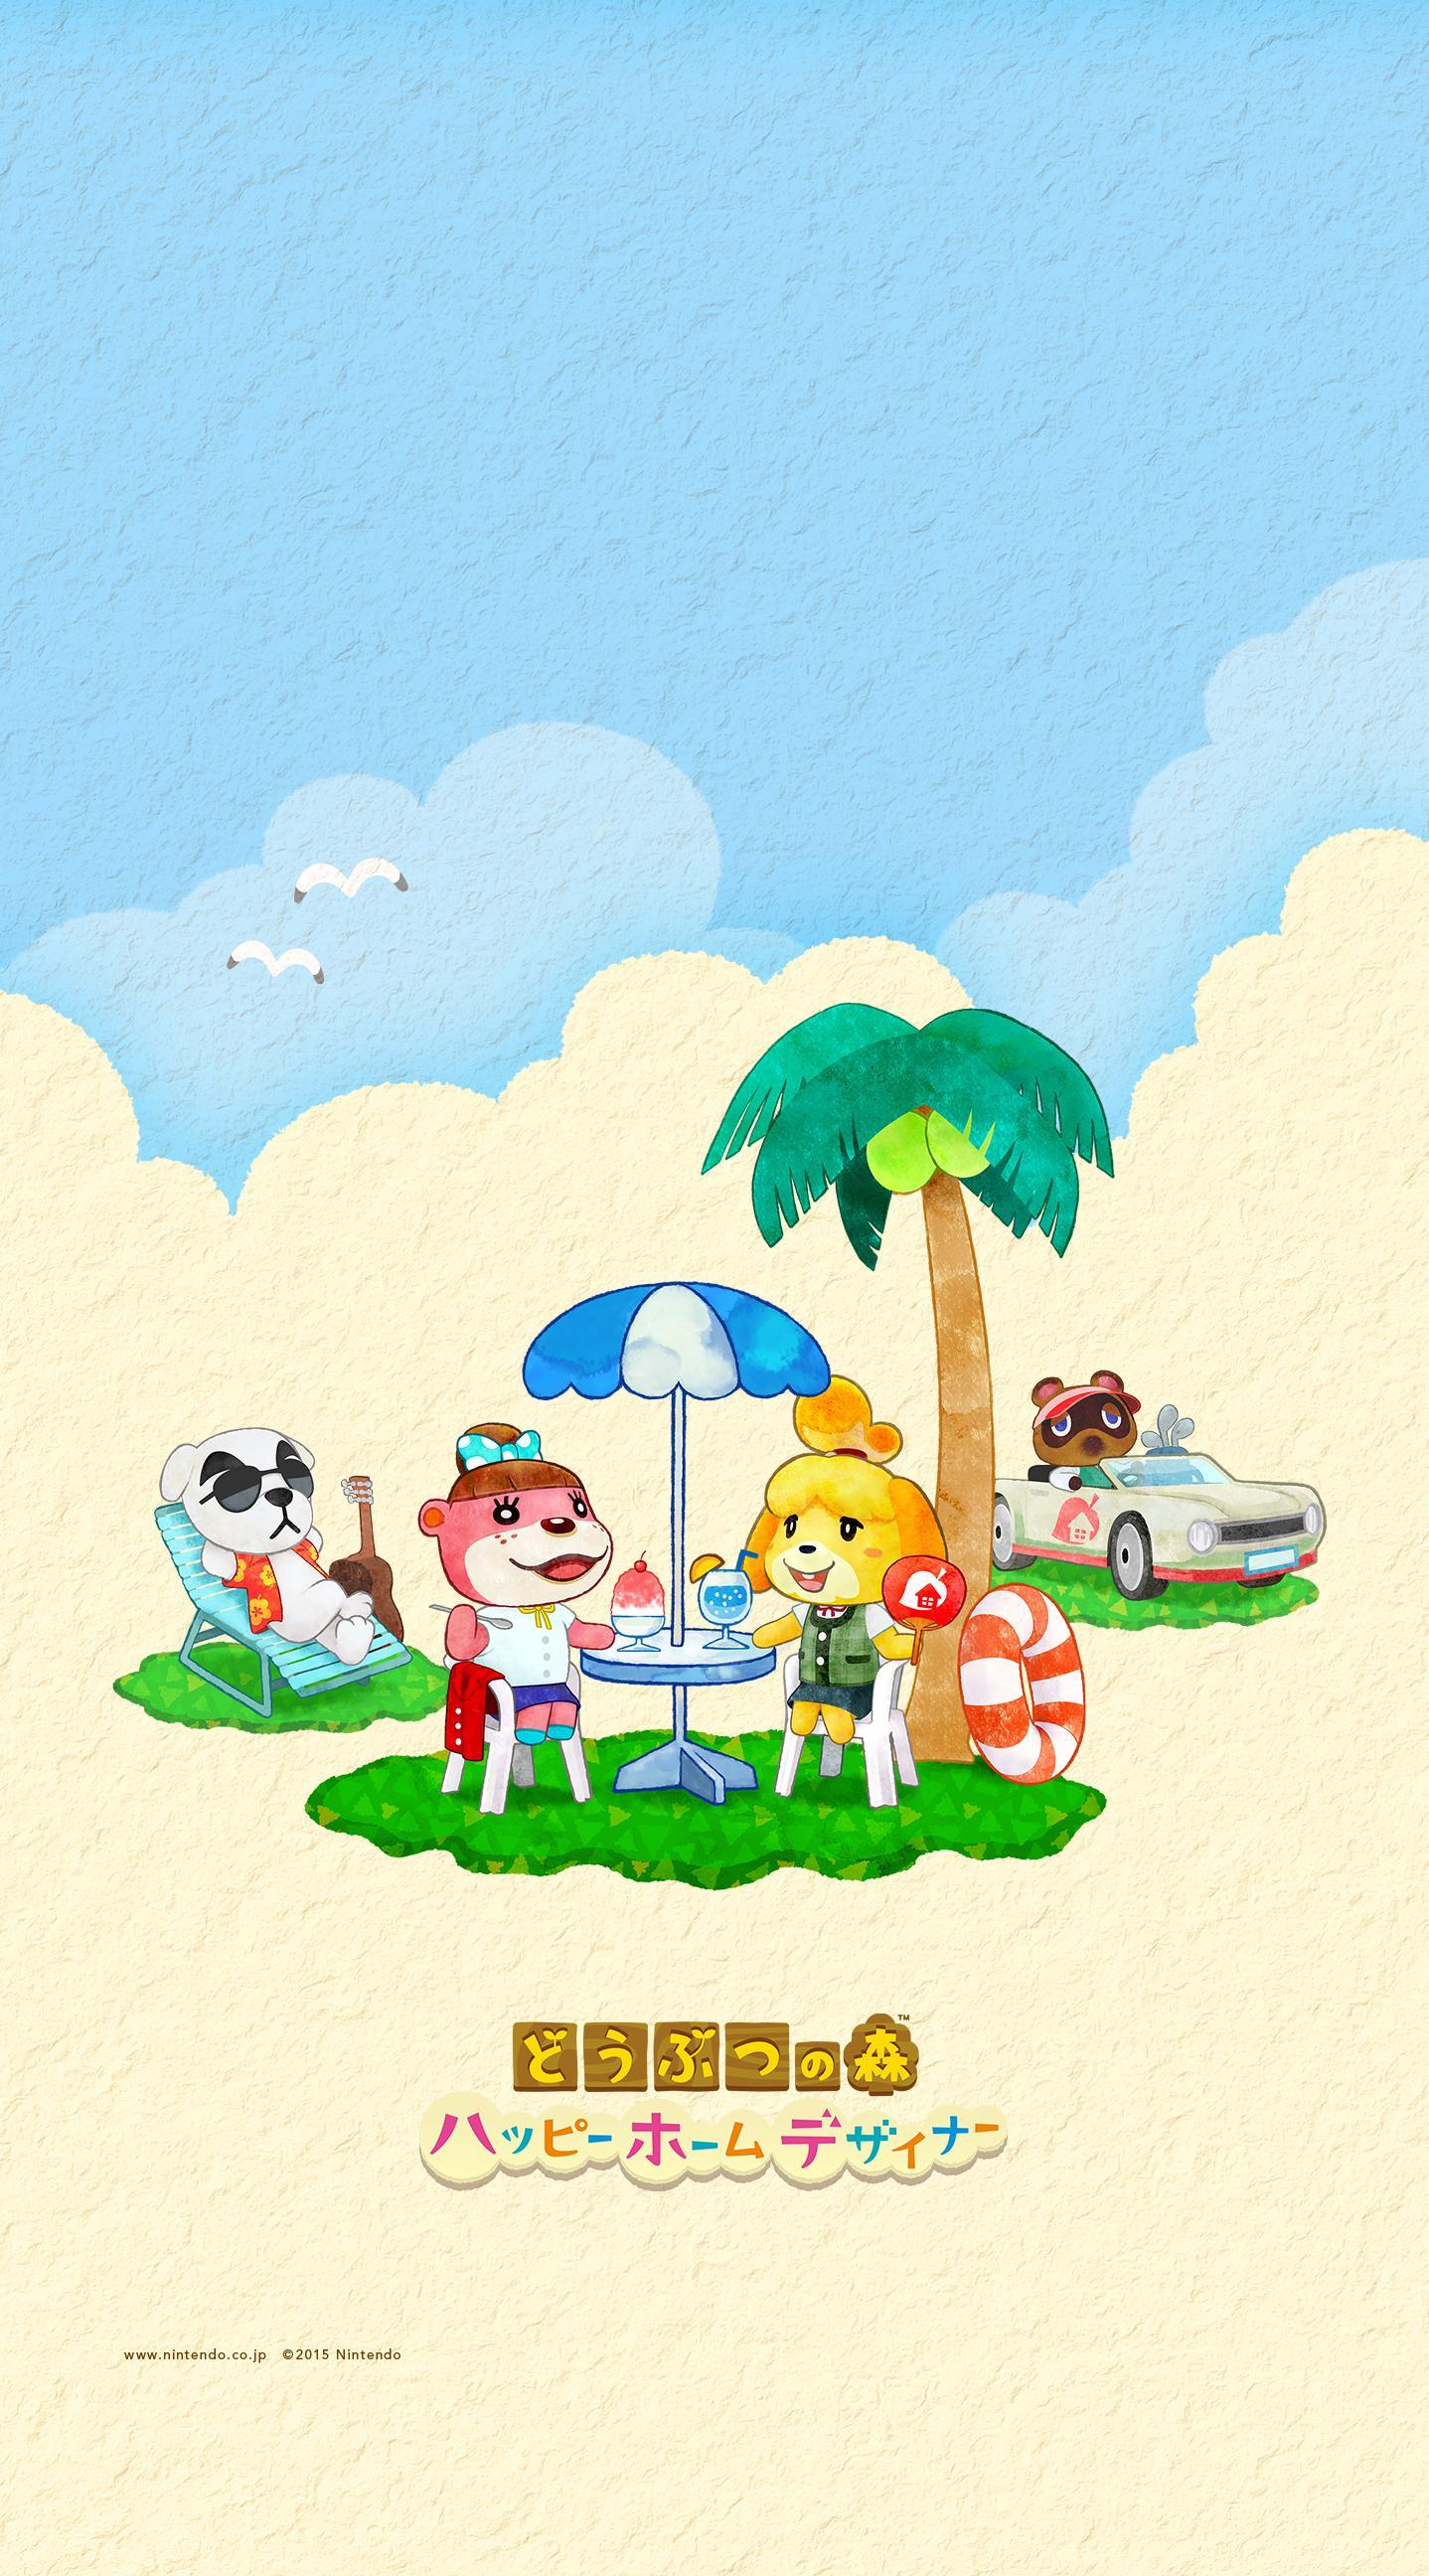 Cute summer Animal Crossing: Happy Home Designer wallpapers from Nintendo